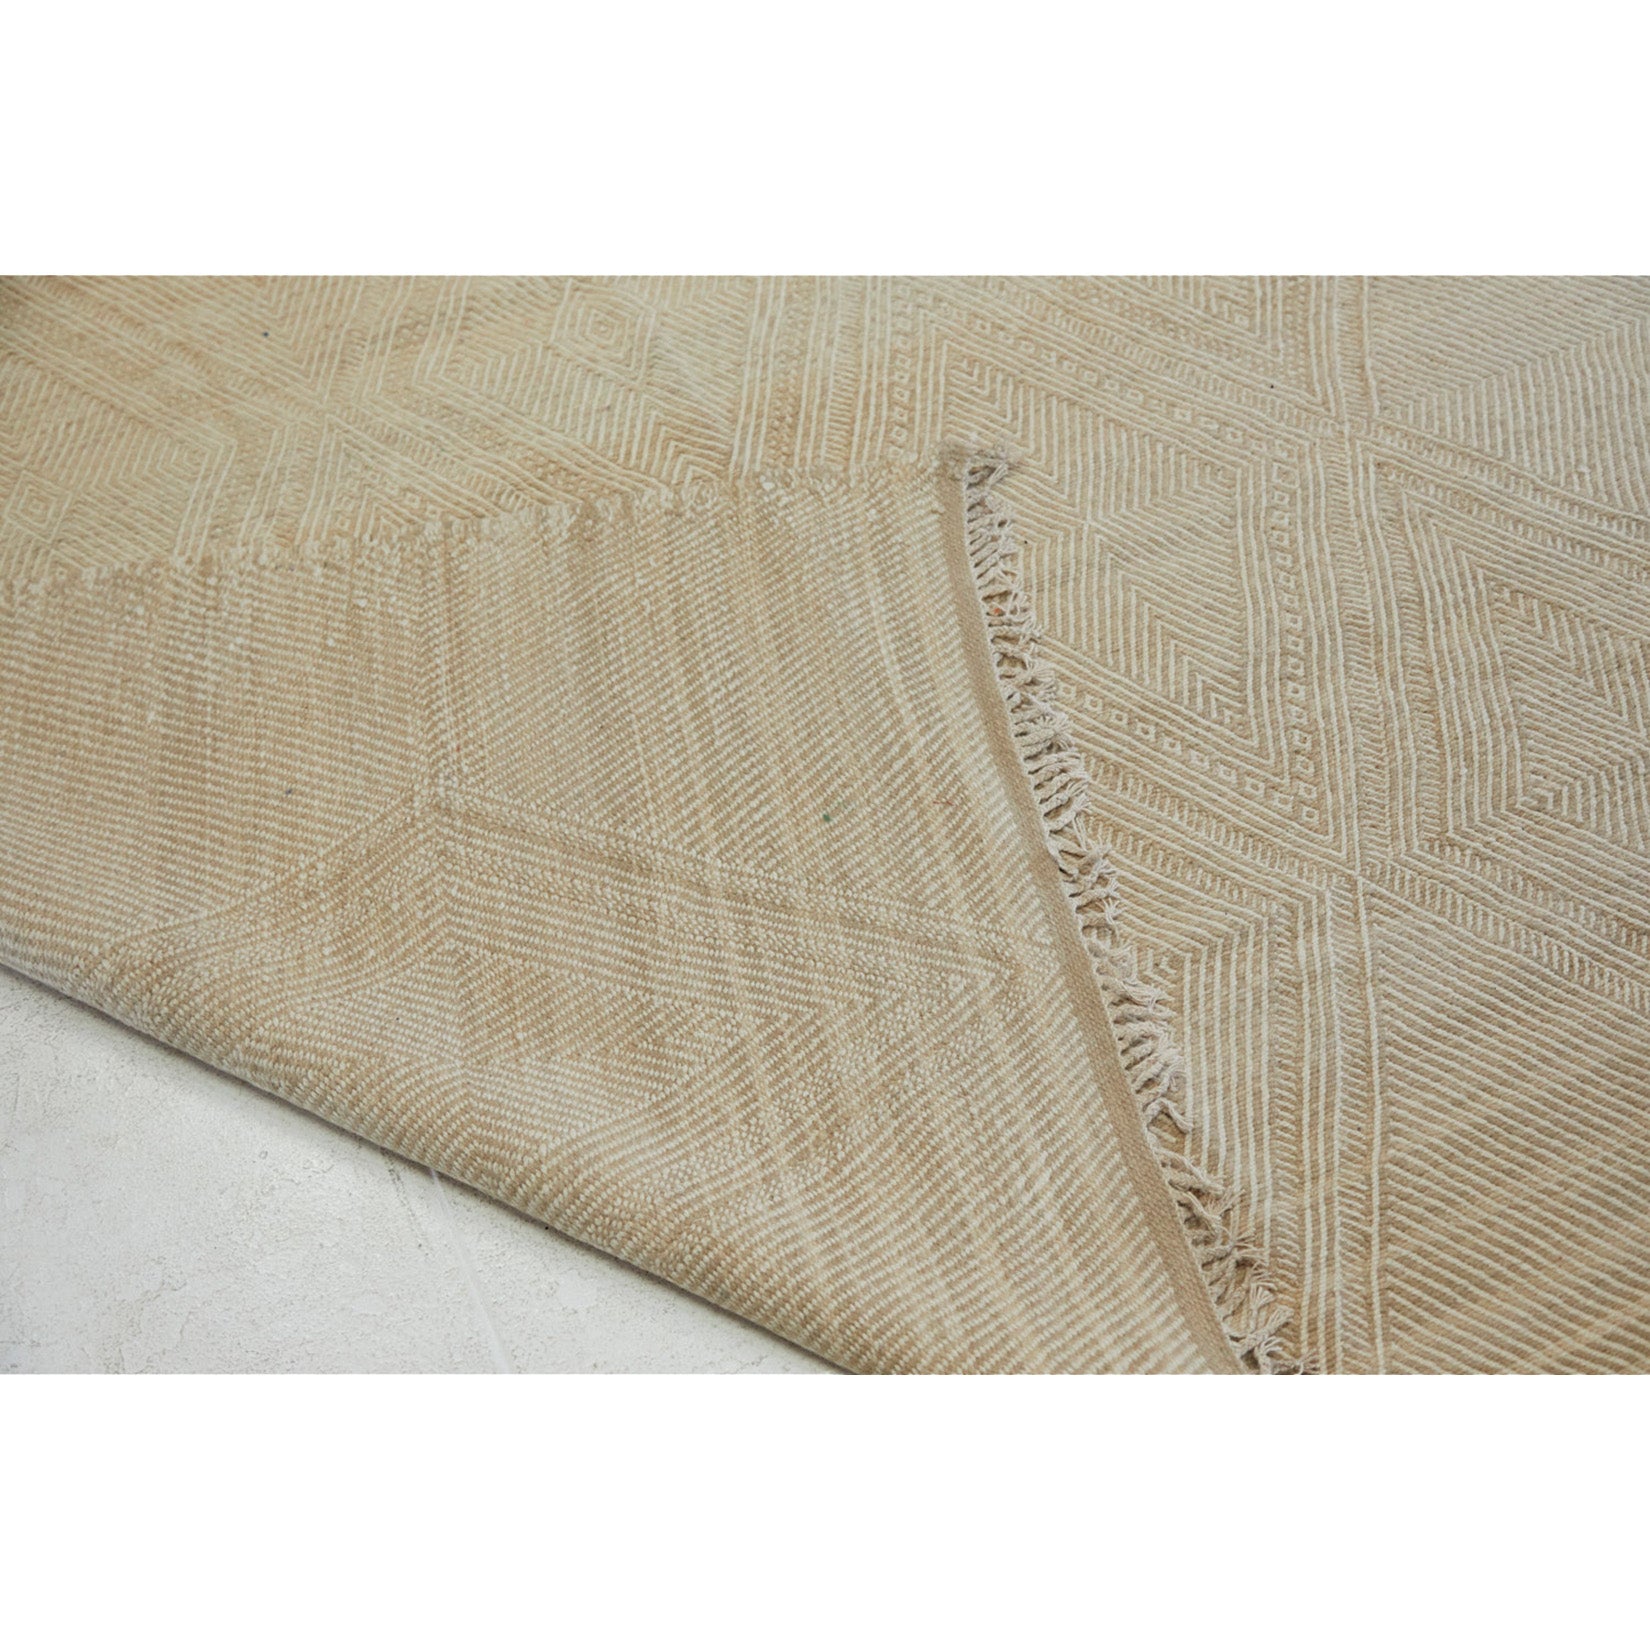 8' x 10' flatweave Moroccan rug in neutral and ecru tones